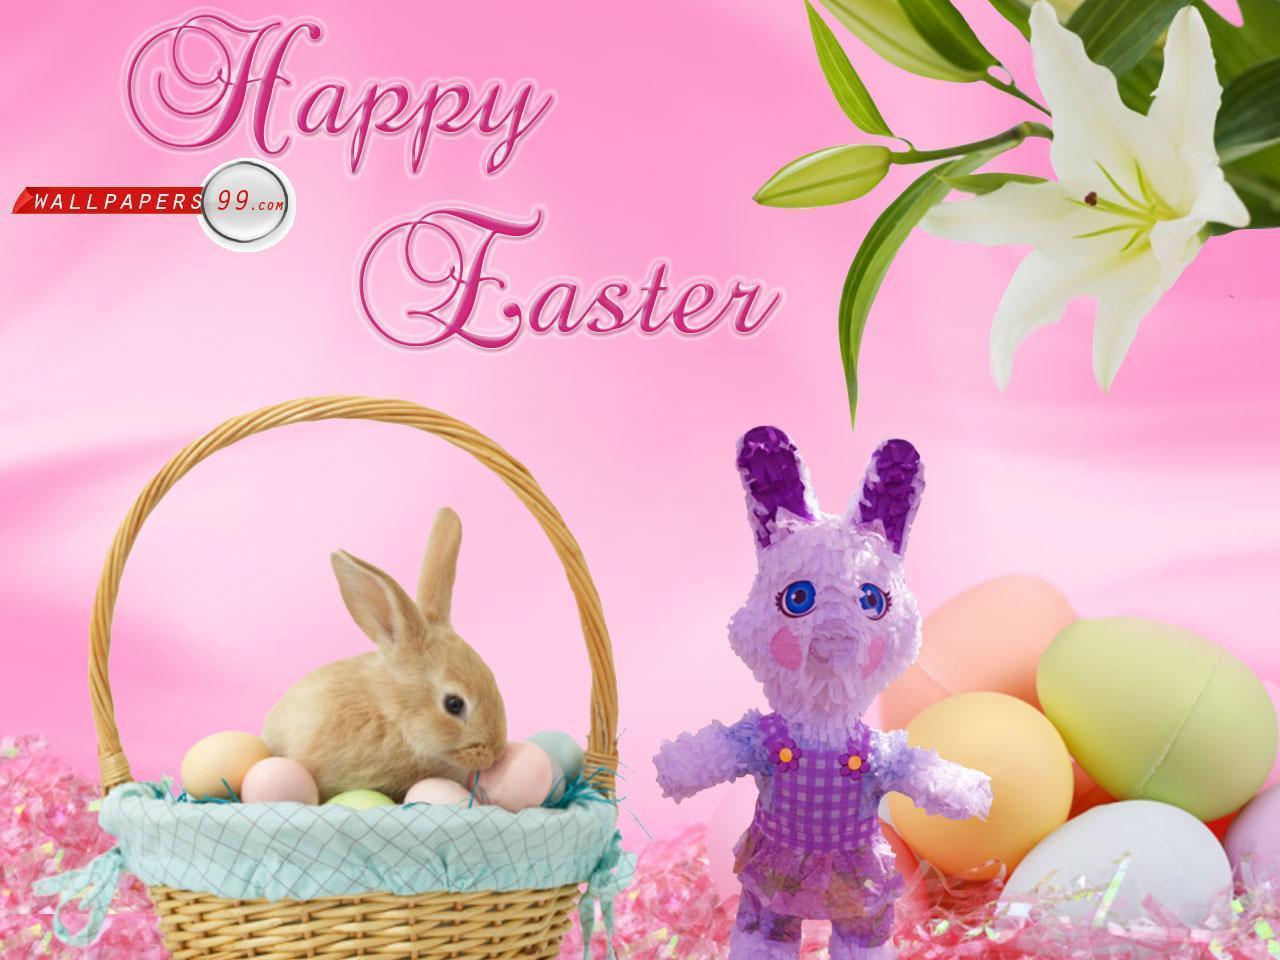 Happy Easter 15 222429 Image HD Wallpaper. Wallfoy.com